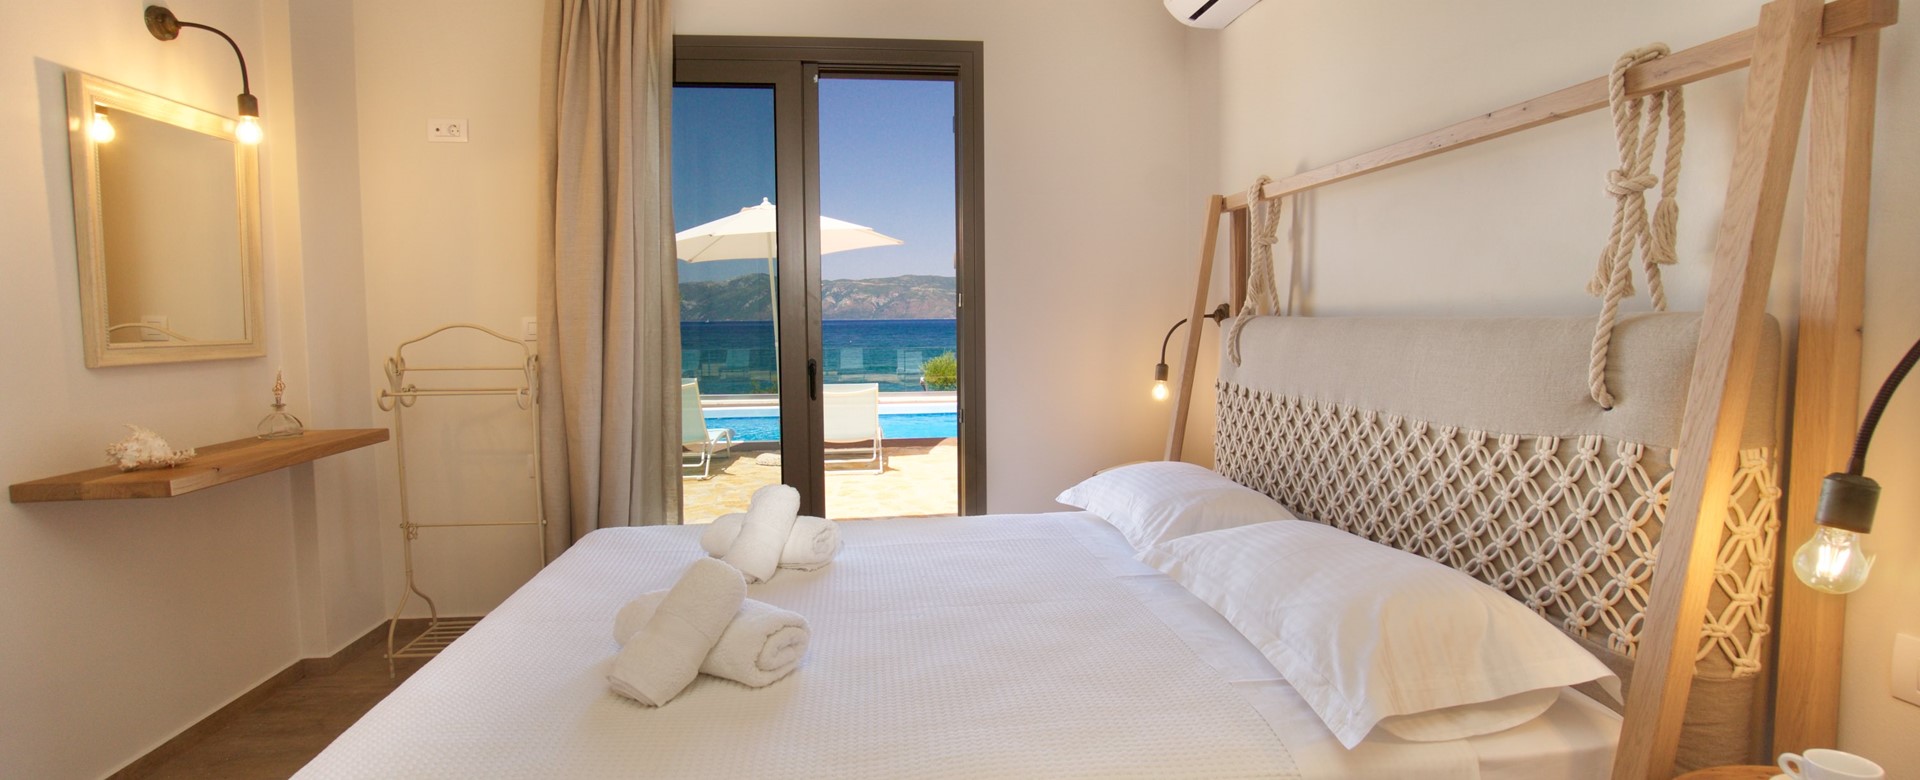 Comfortable large double bed with a view inside Villa Frydi, Karavomilos, Kefalonia, Greek Islands